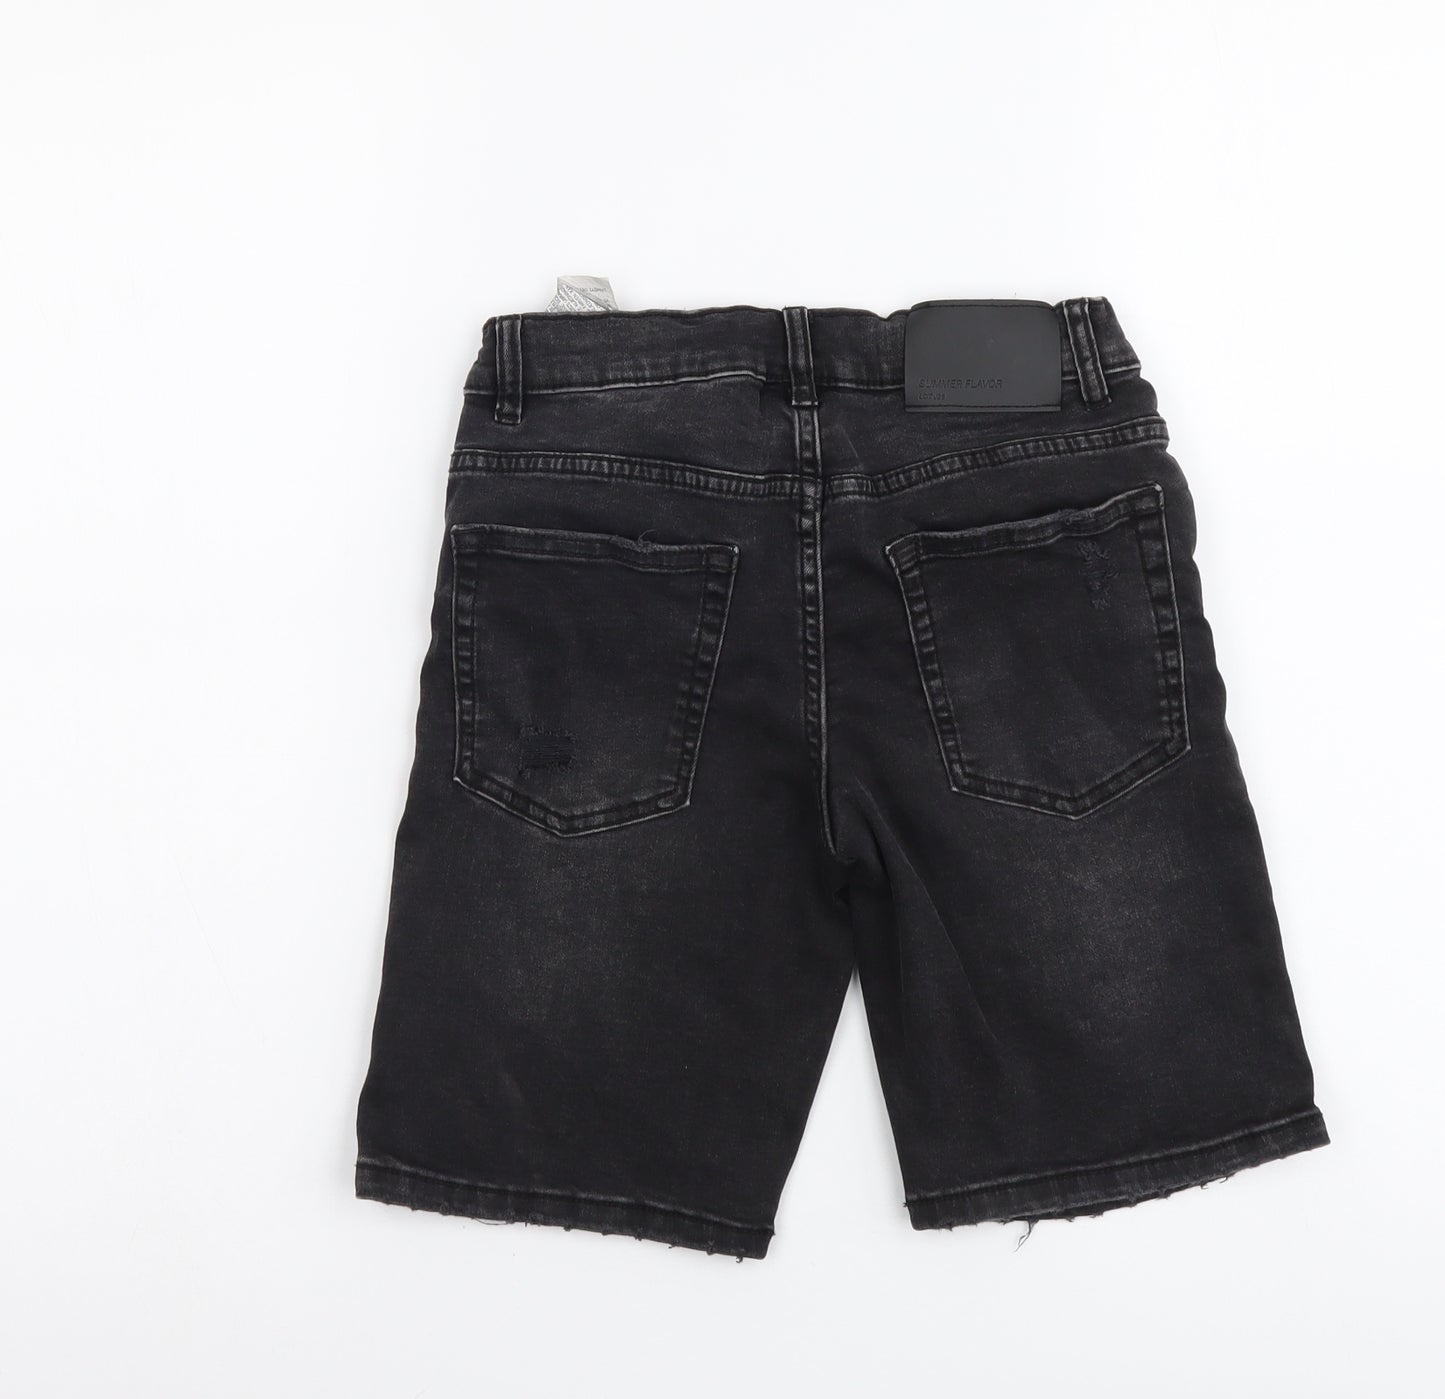 Zara Boys Grey Cotton Bermuda Shorts Size 10 Years Regular Zip - Distressed Look